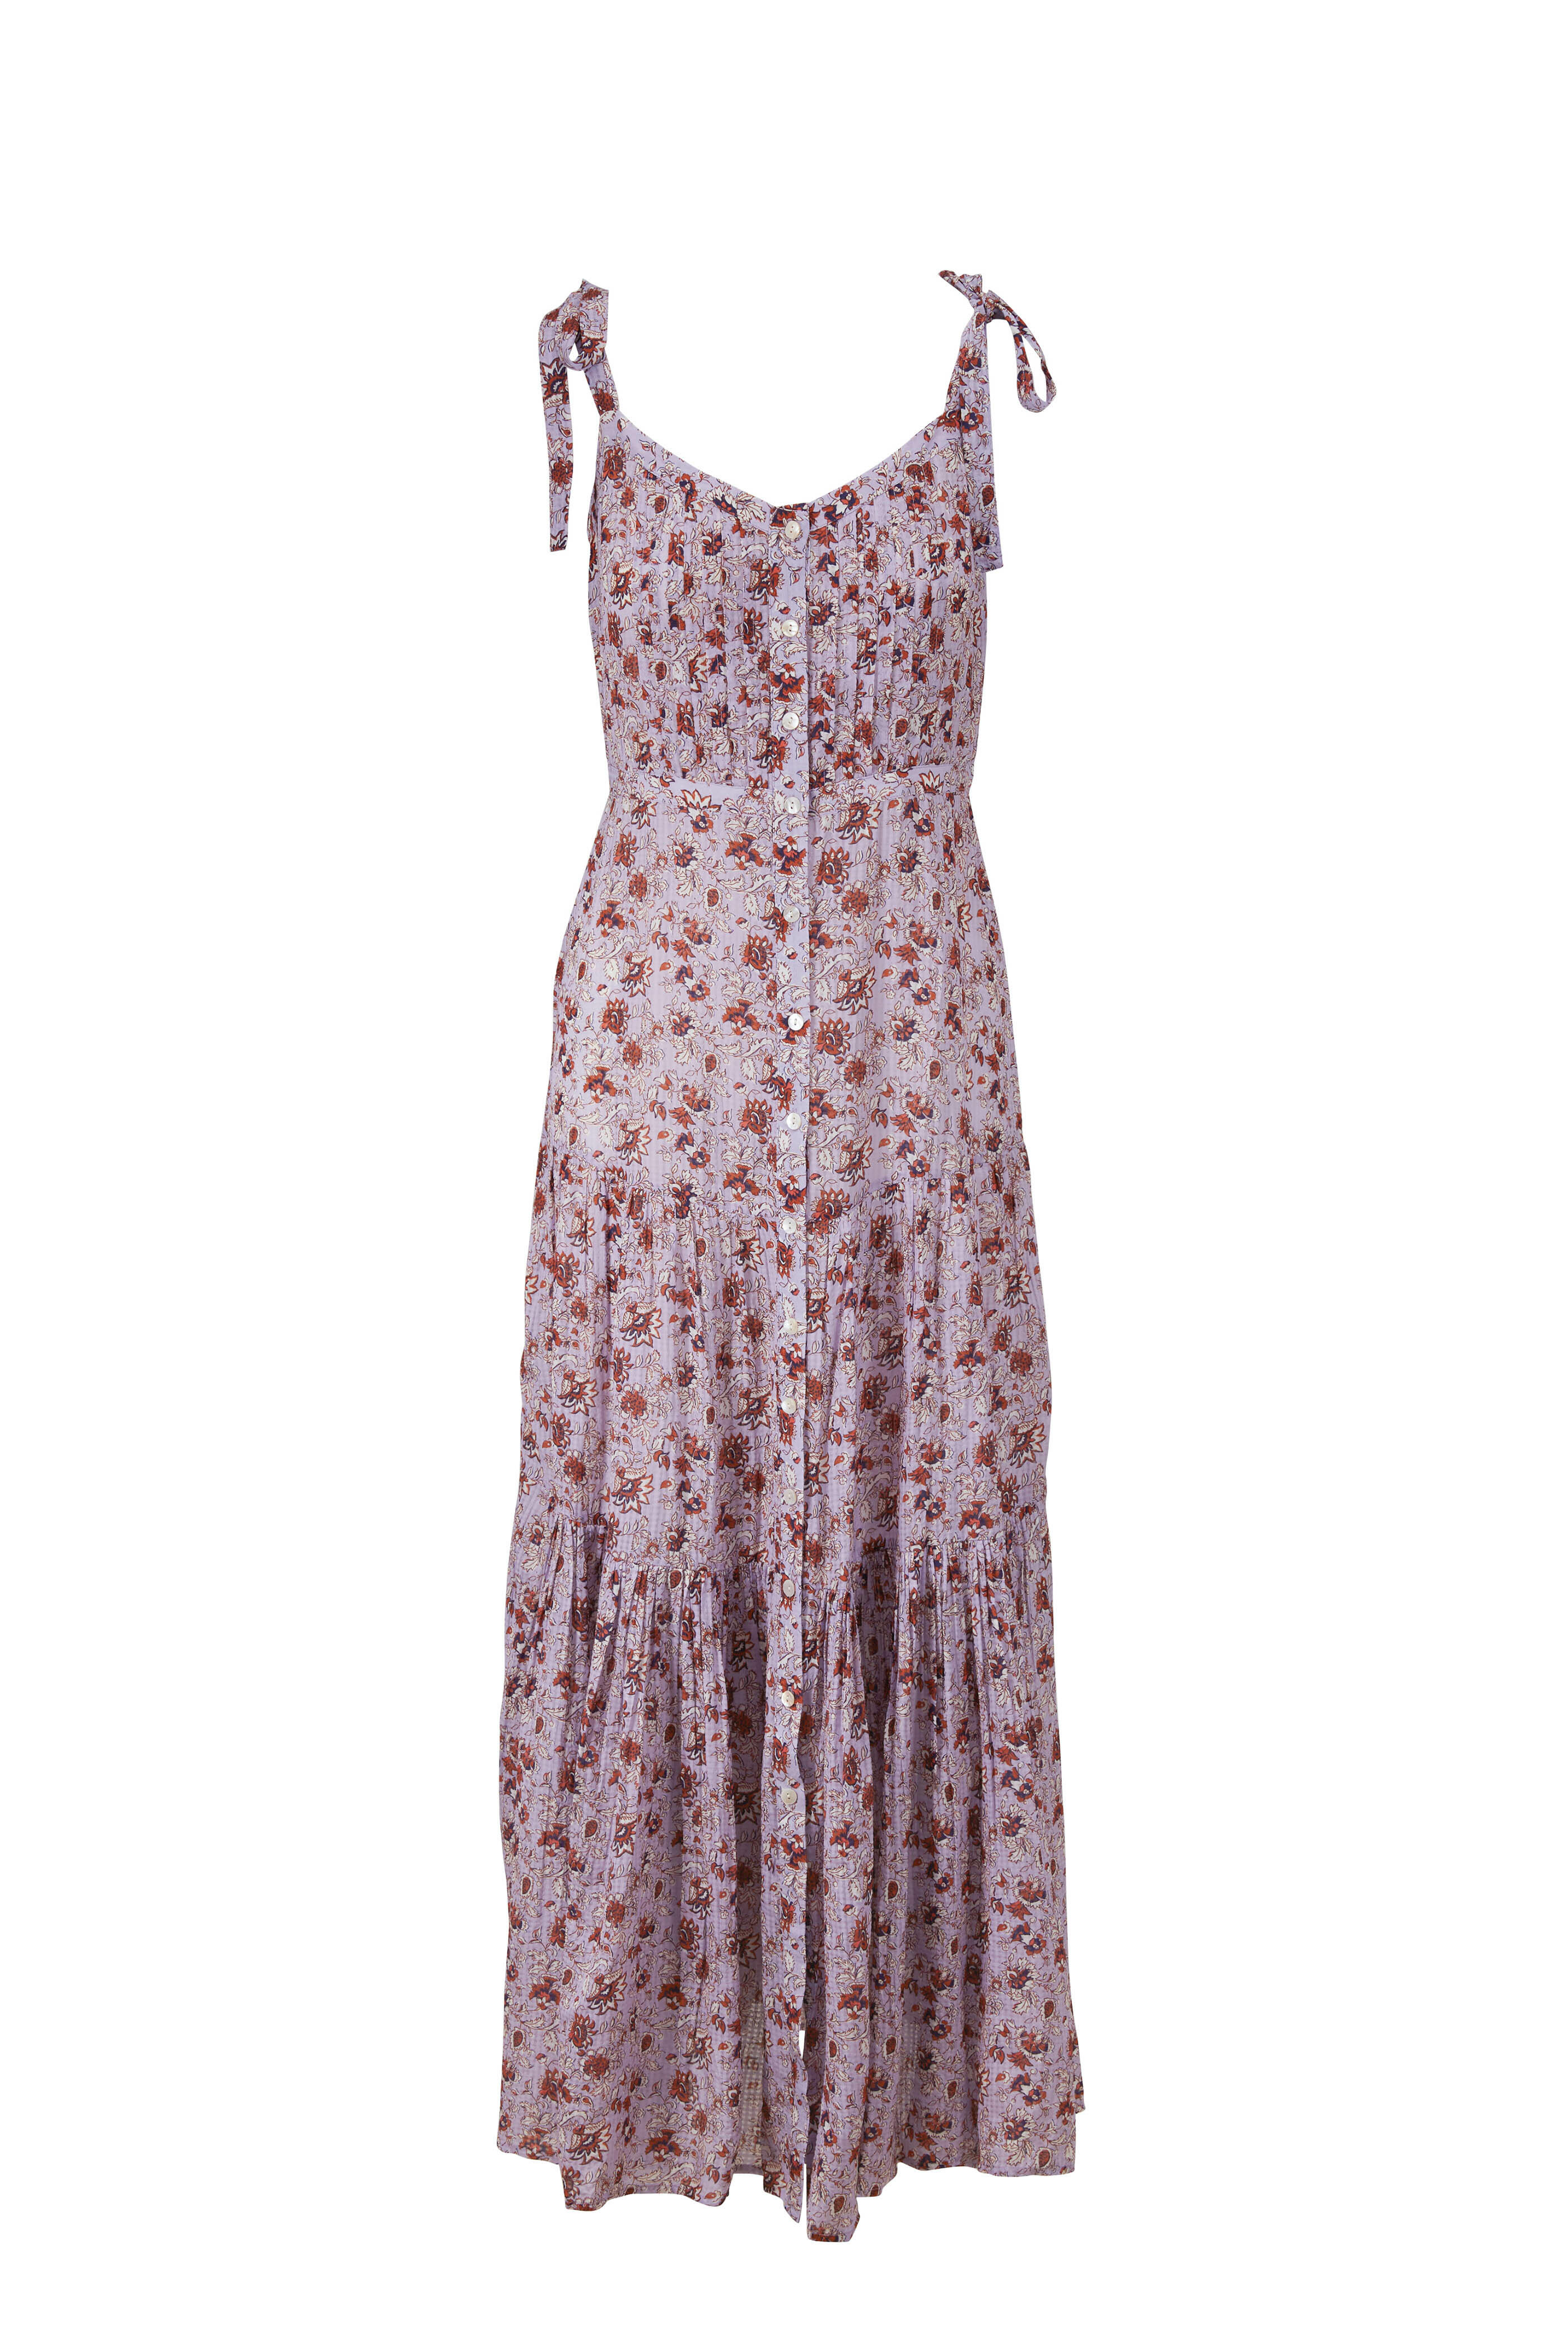 Veronica Beard - Windansea Lavender Multi Printed Cover-Up Dress